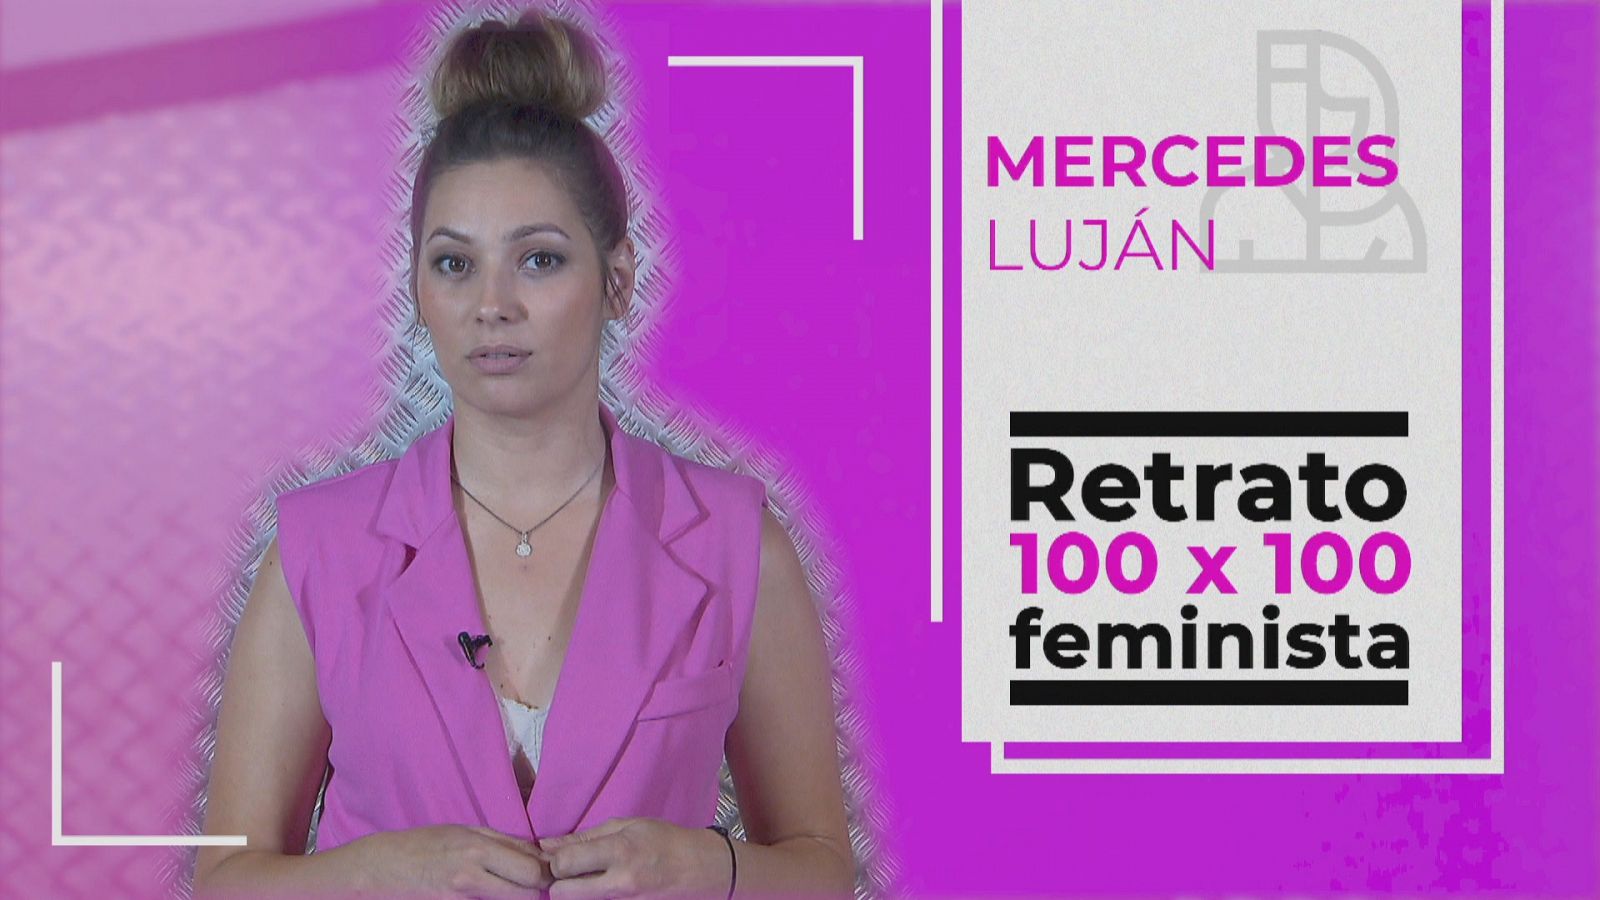 Retrato 100x100 feminista: Mercedes Luján